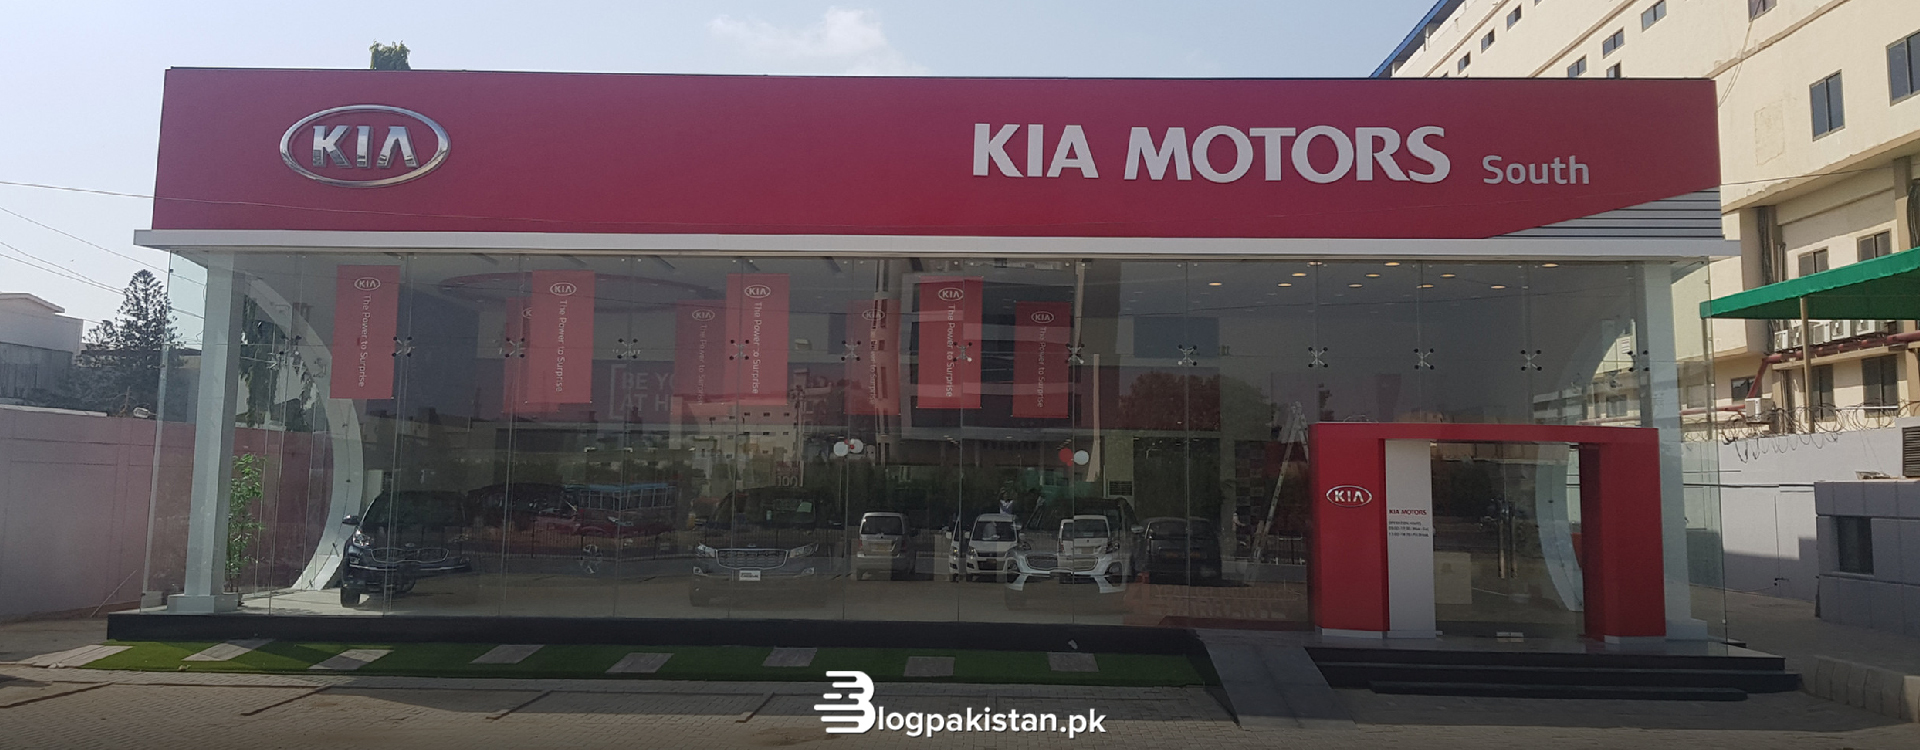 8 Best KIA Showrooms & Dealerships in Karachi For Car Bookings